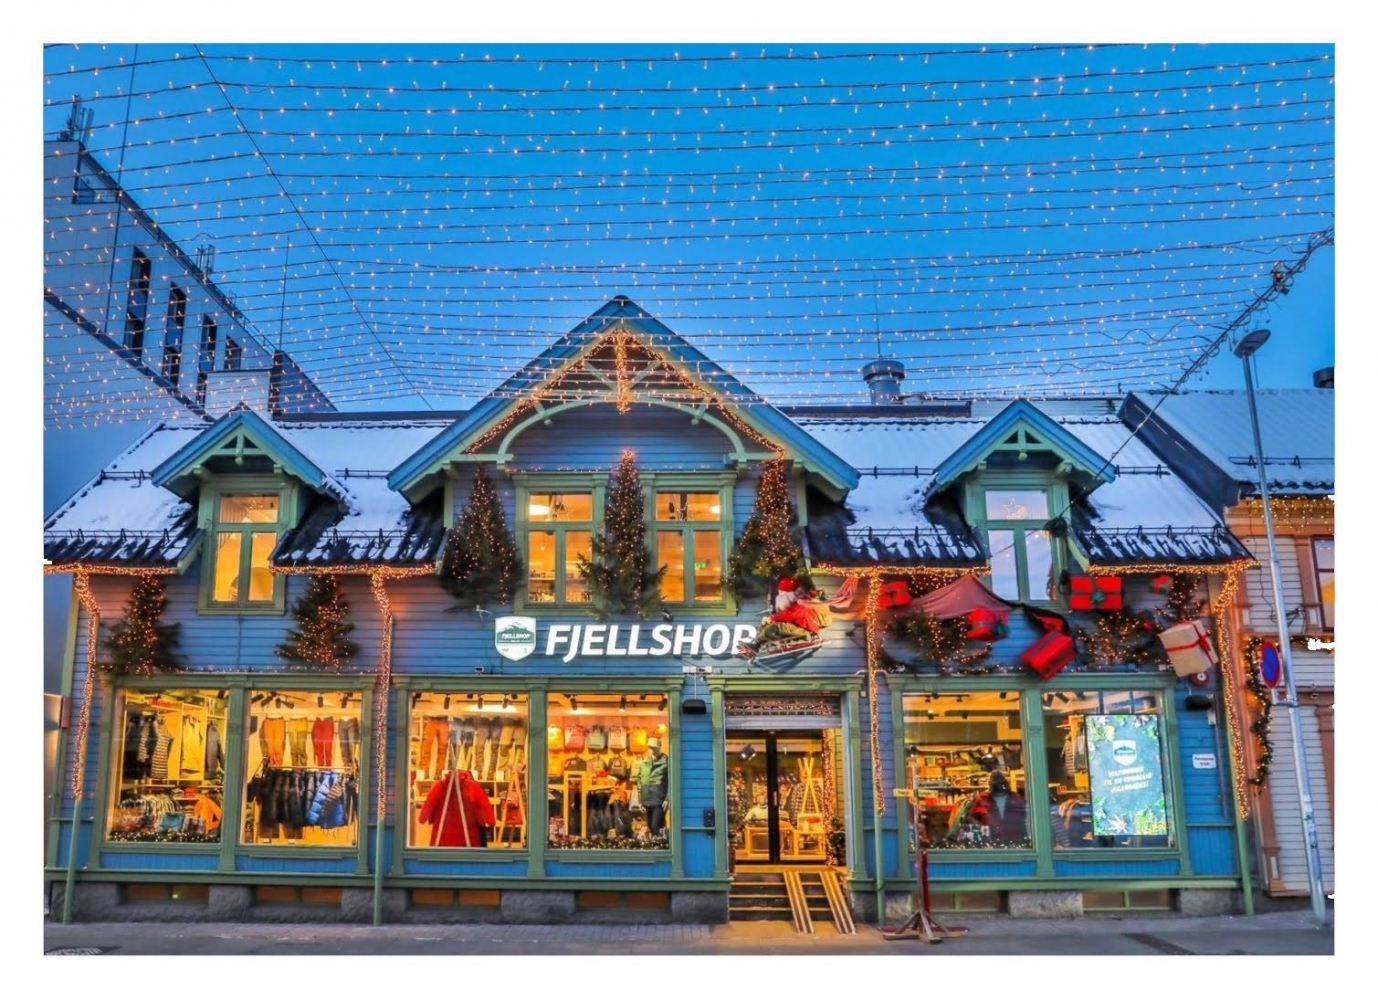 Fjellshop entrance with Christmas decorations